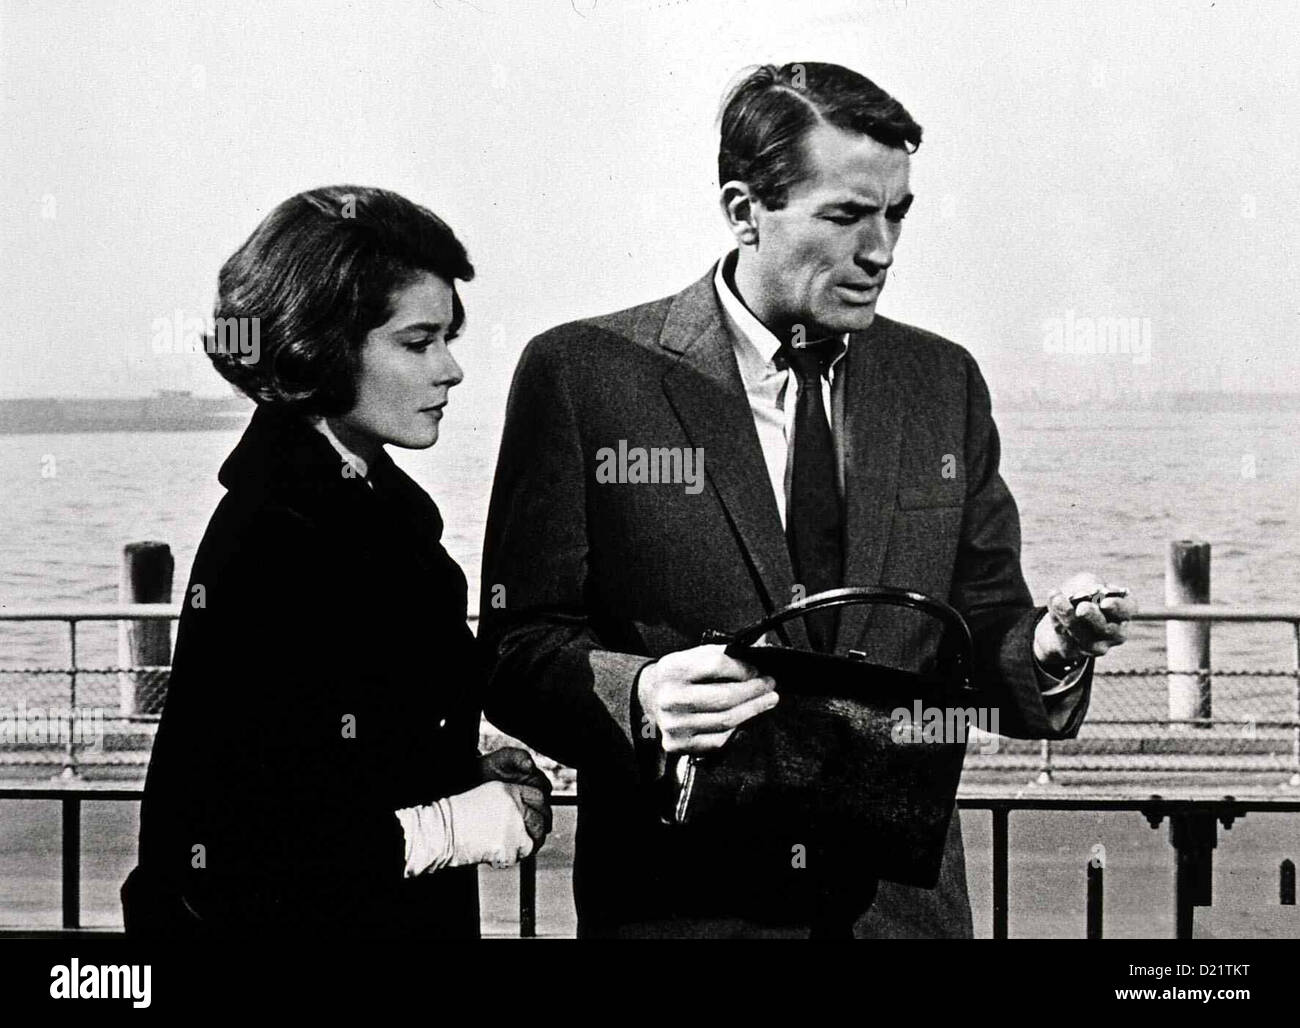 Die 27. Etage   Mirage   Sheila (Diane Baker), David (Gregory Peck) *** Local Caption *** 1965  -- Stock Photo